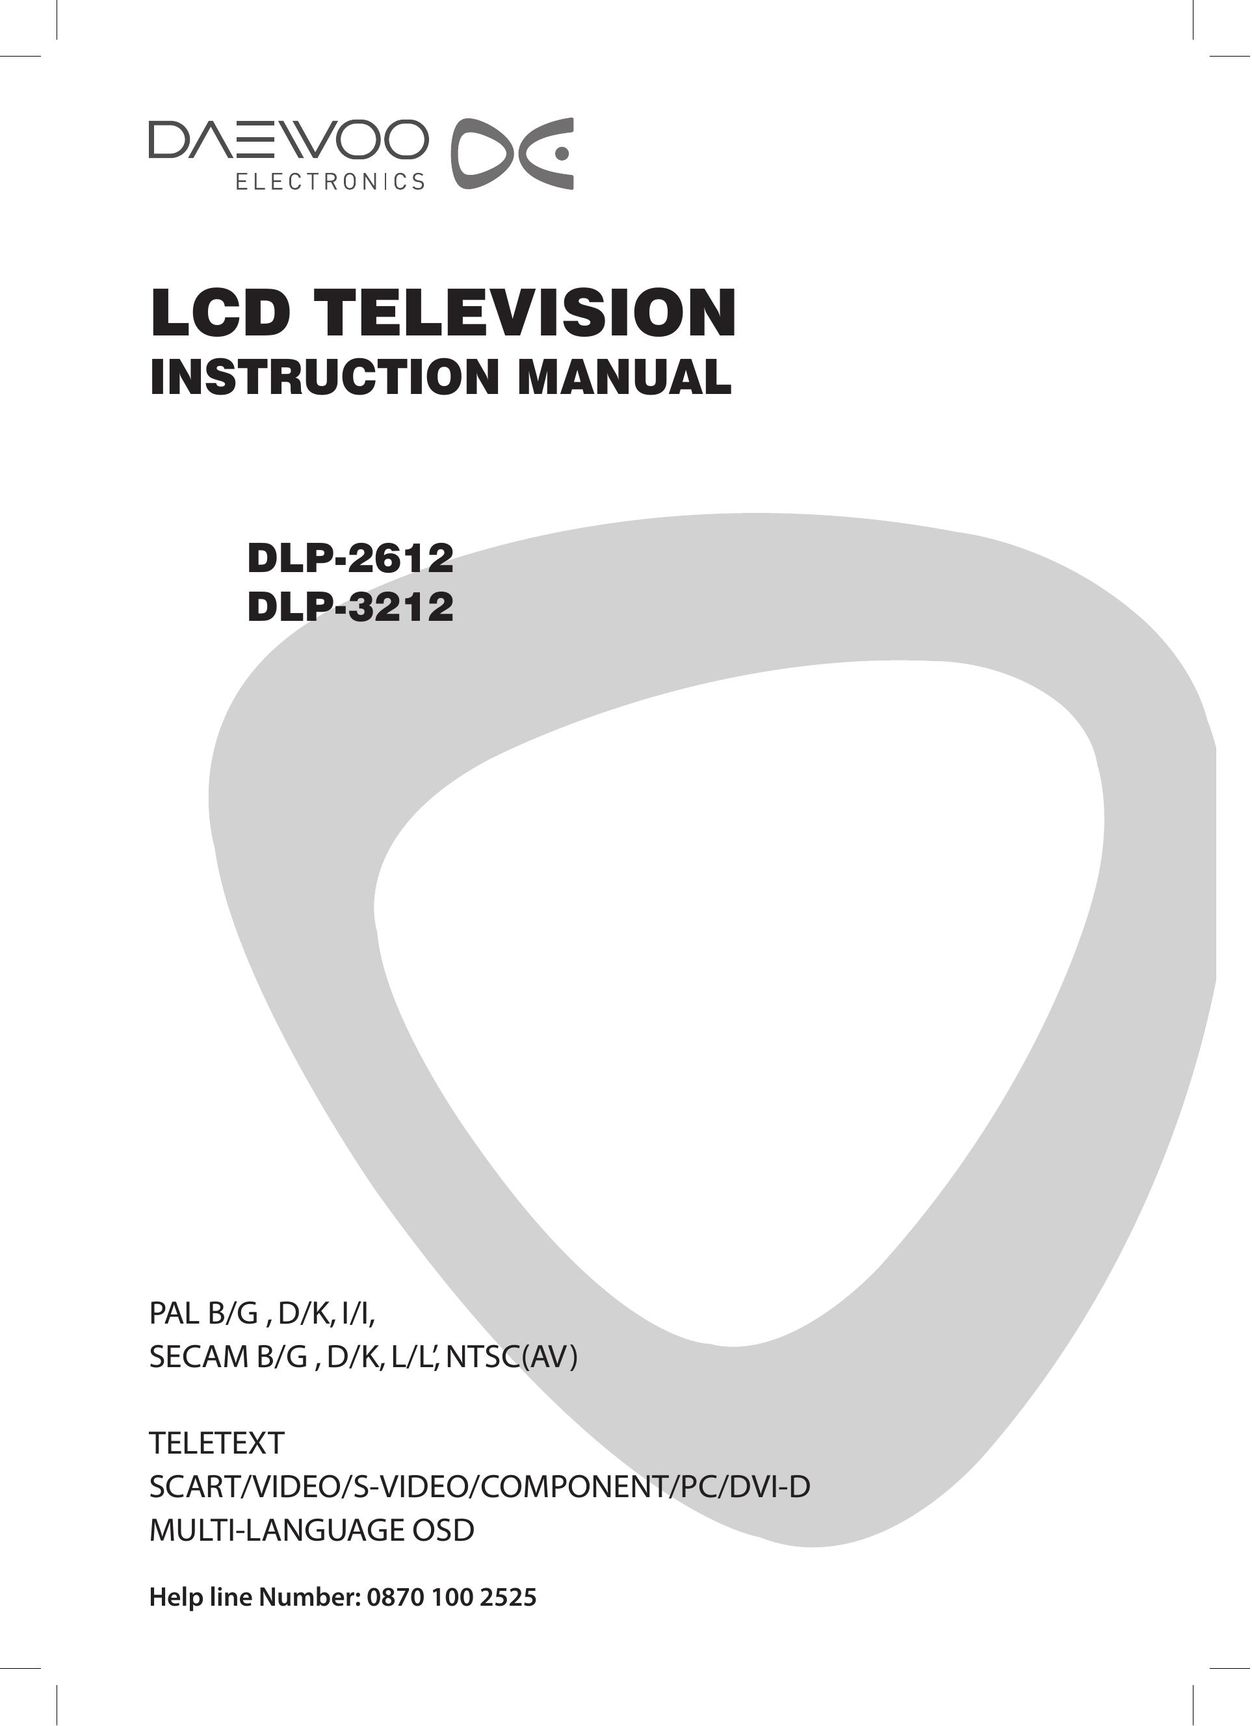 Daewoo DLP-2612 Flat Panel Television User Manual